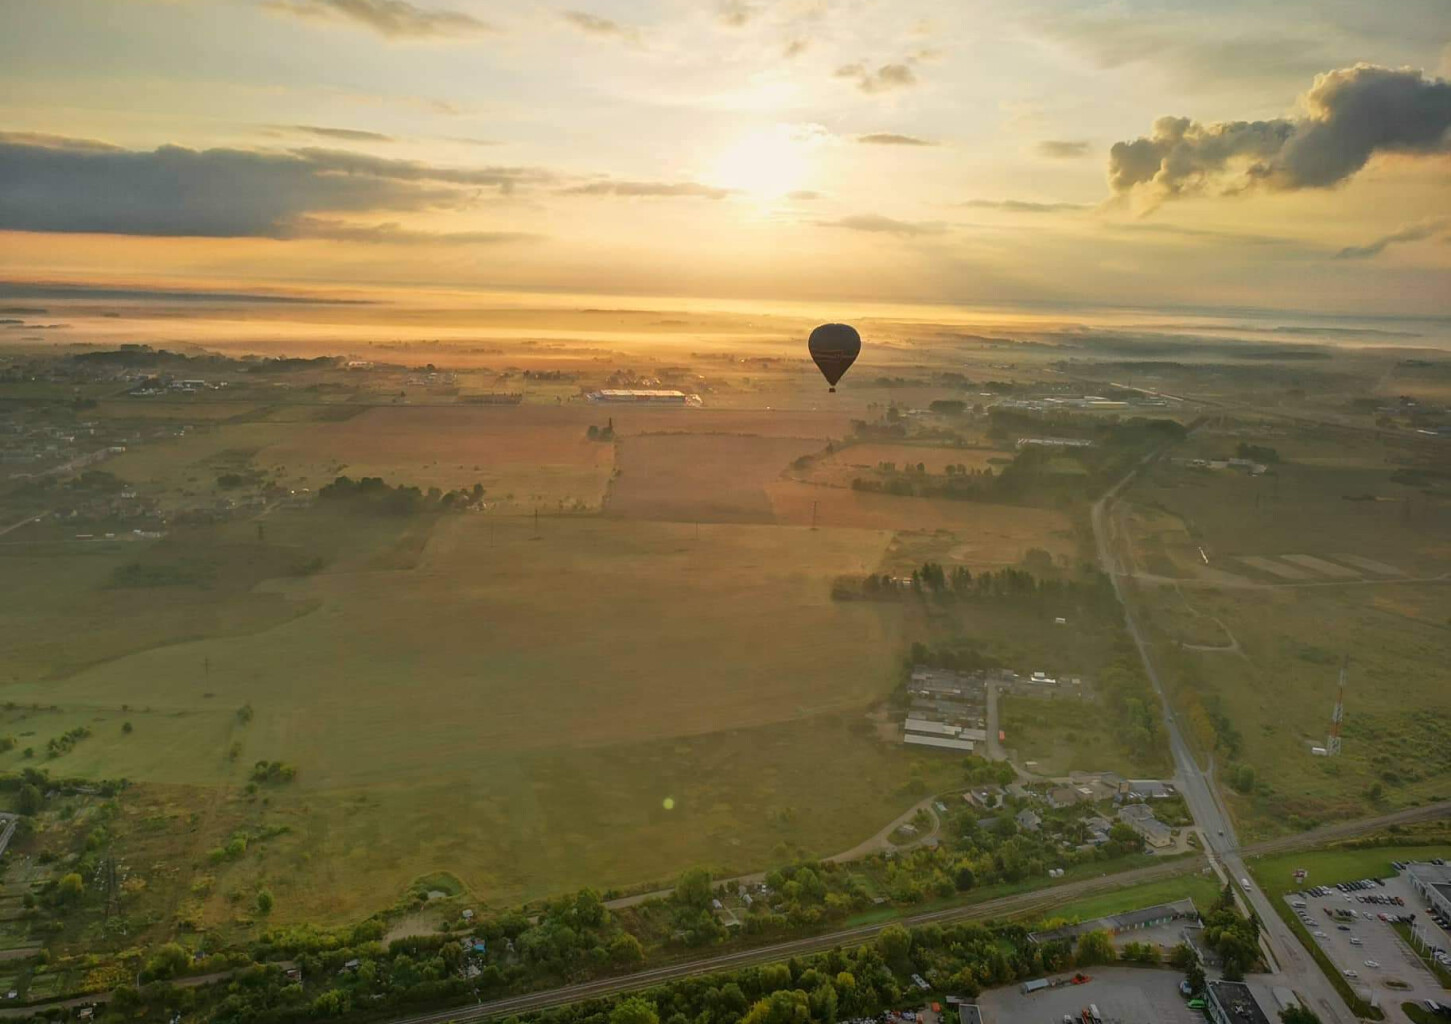 Skrydis oro balionu virš Klaipėdos